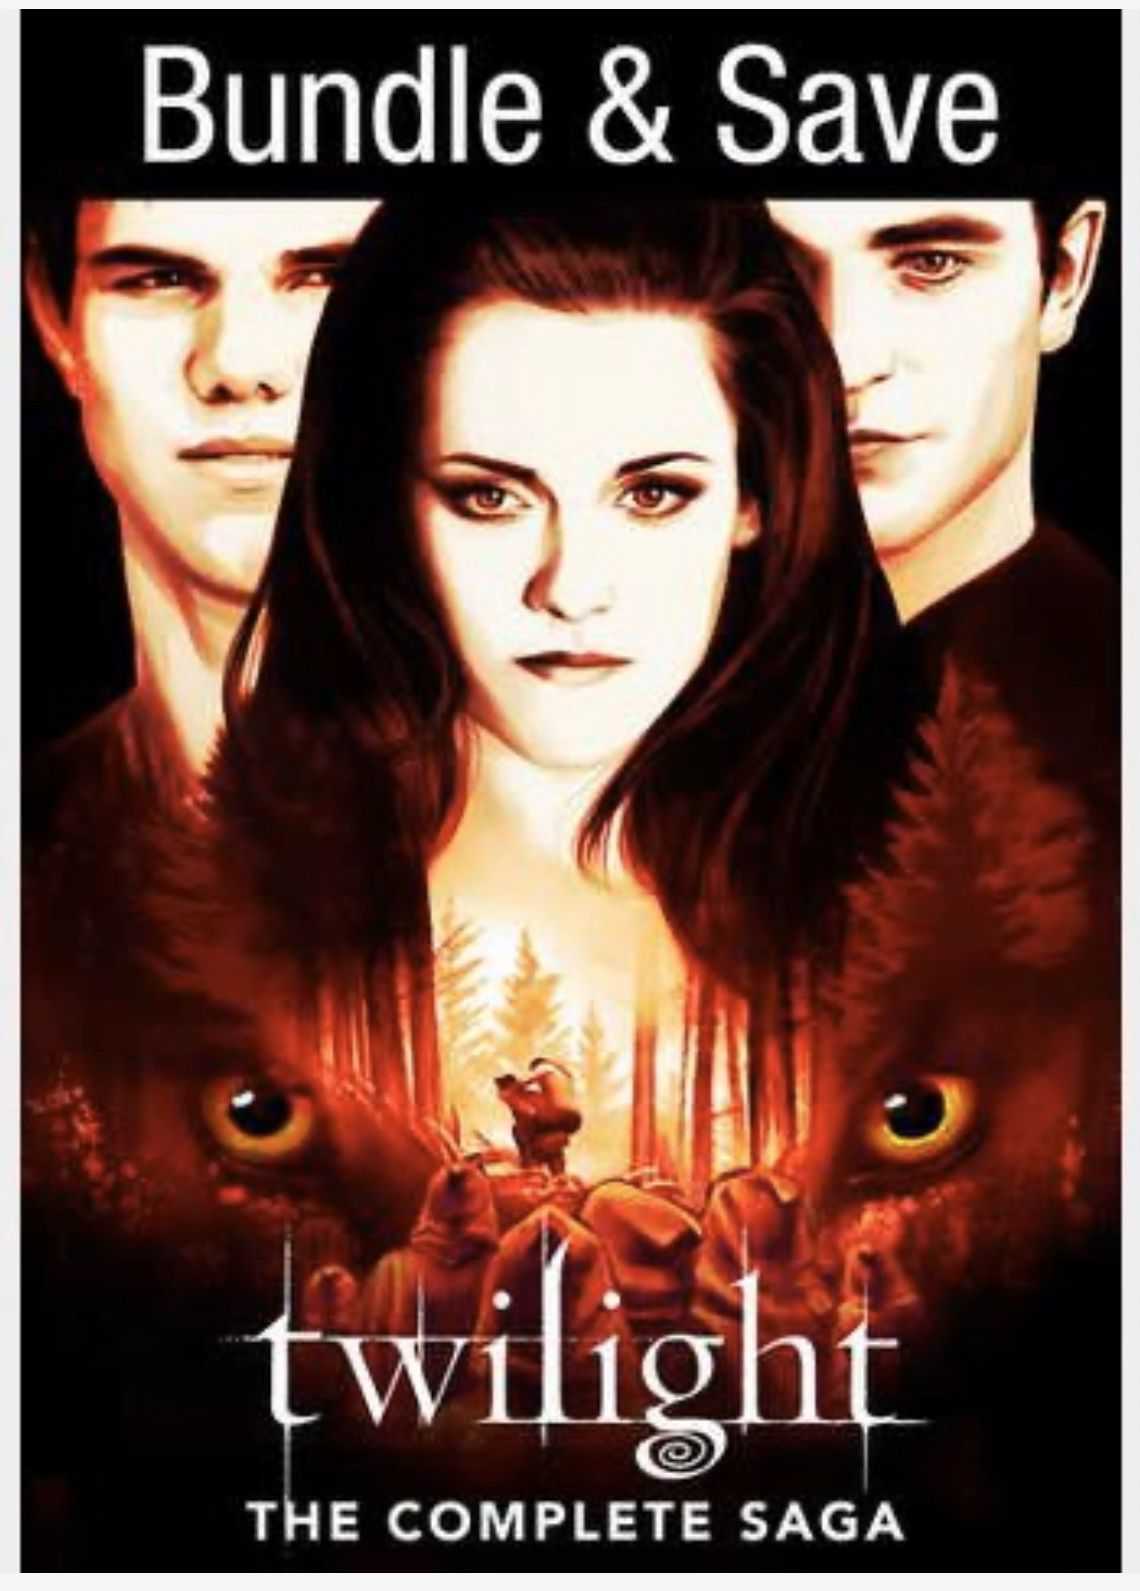 Twilight: The Complete Saga - 5 Movies Collection - Digital Copy Code - Vudu HDX